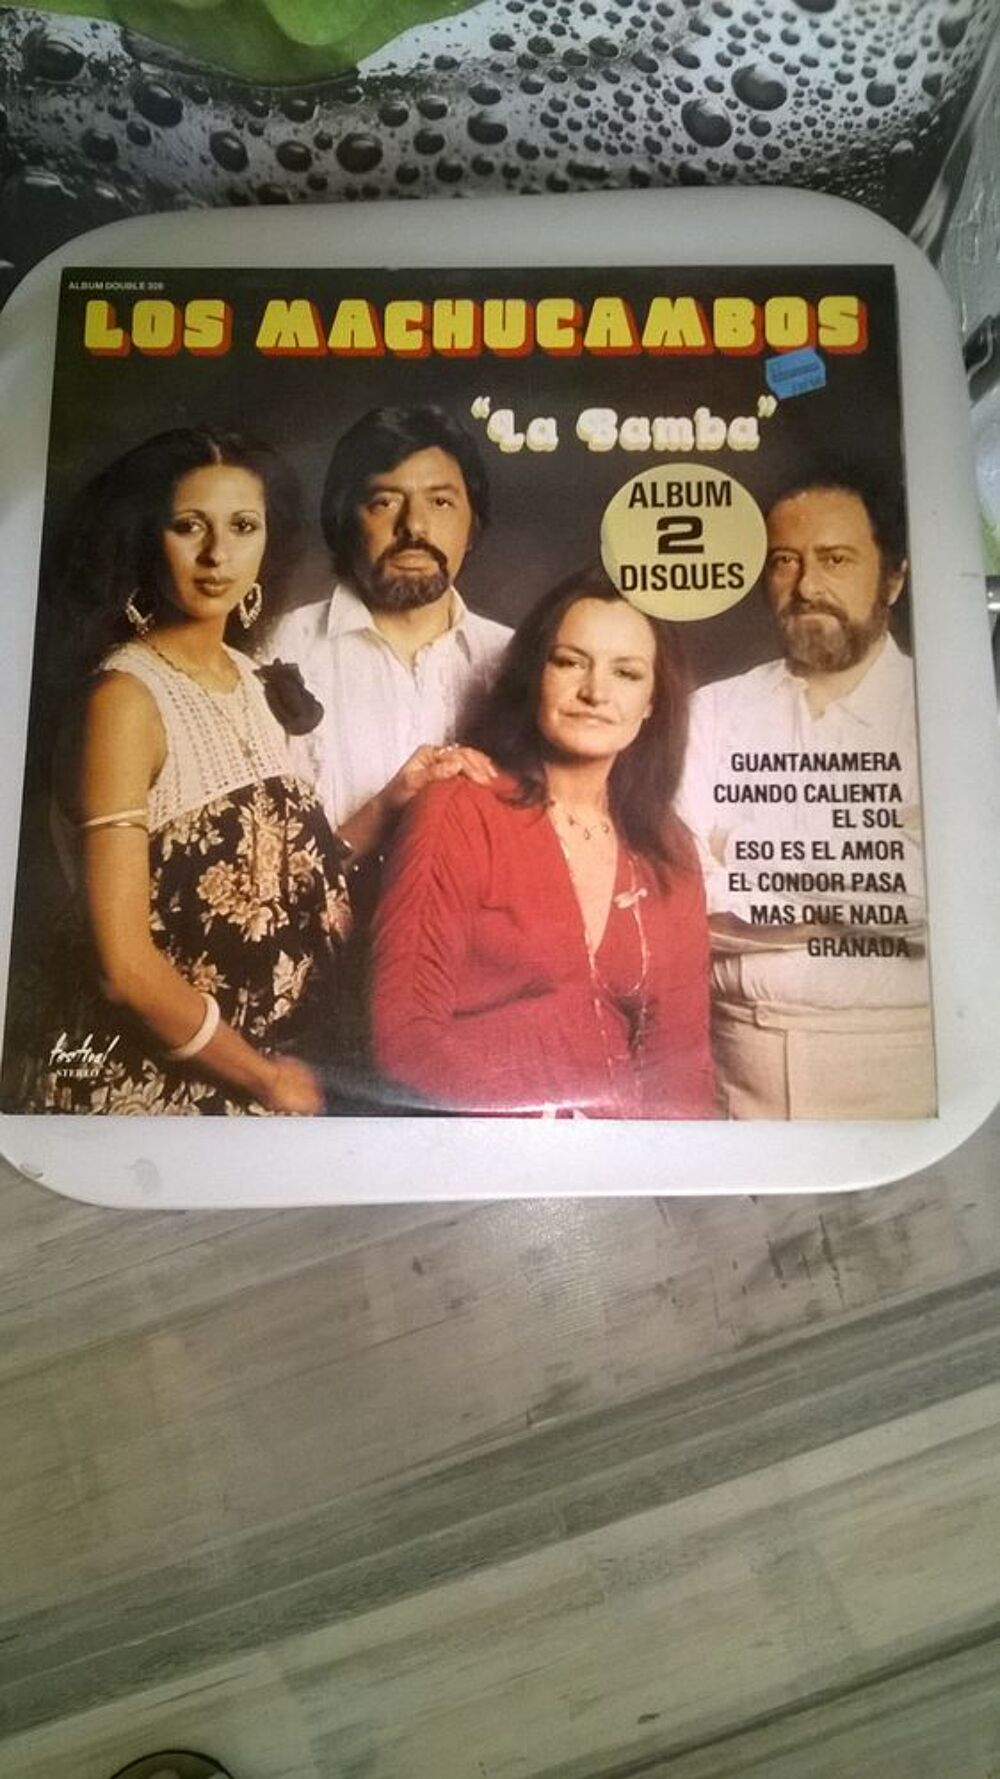 Vinyle Los Machucambos
La Bamba
1979
Excellent etat
Doub CD et vinyles